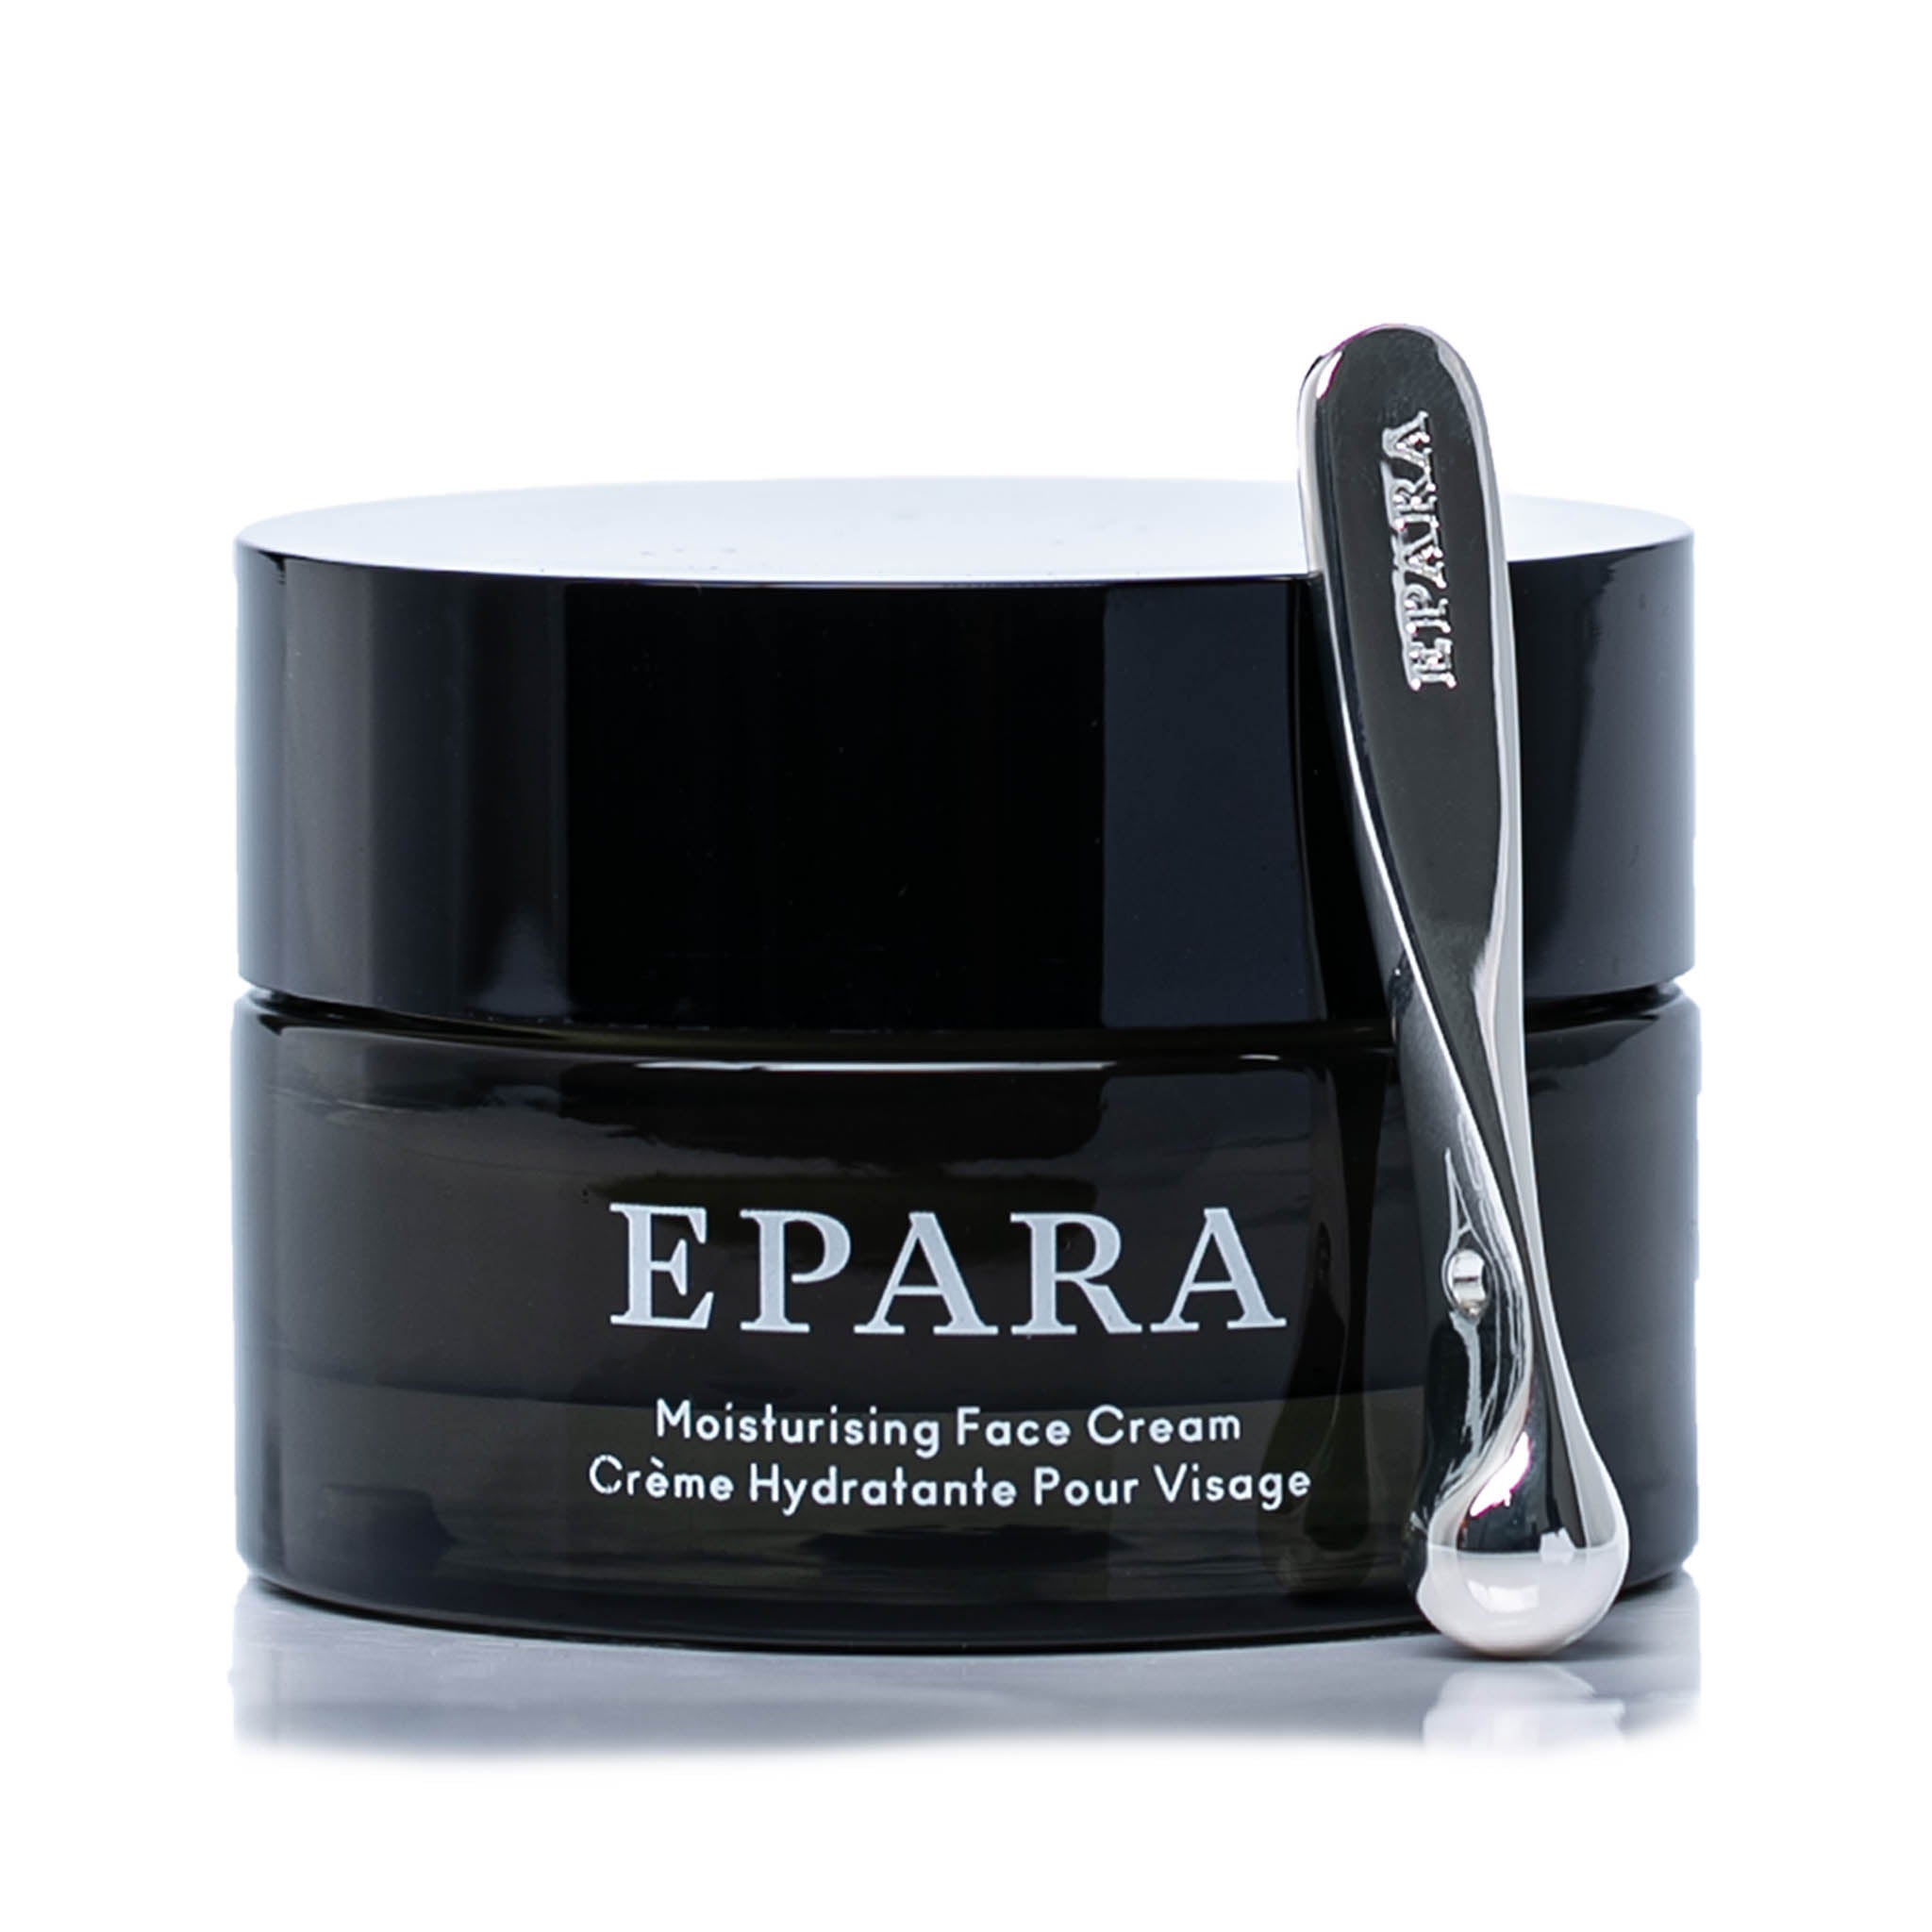 Epara moisturising face cream at Bracketts Beauty